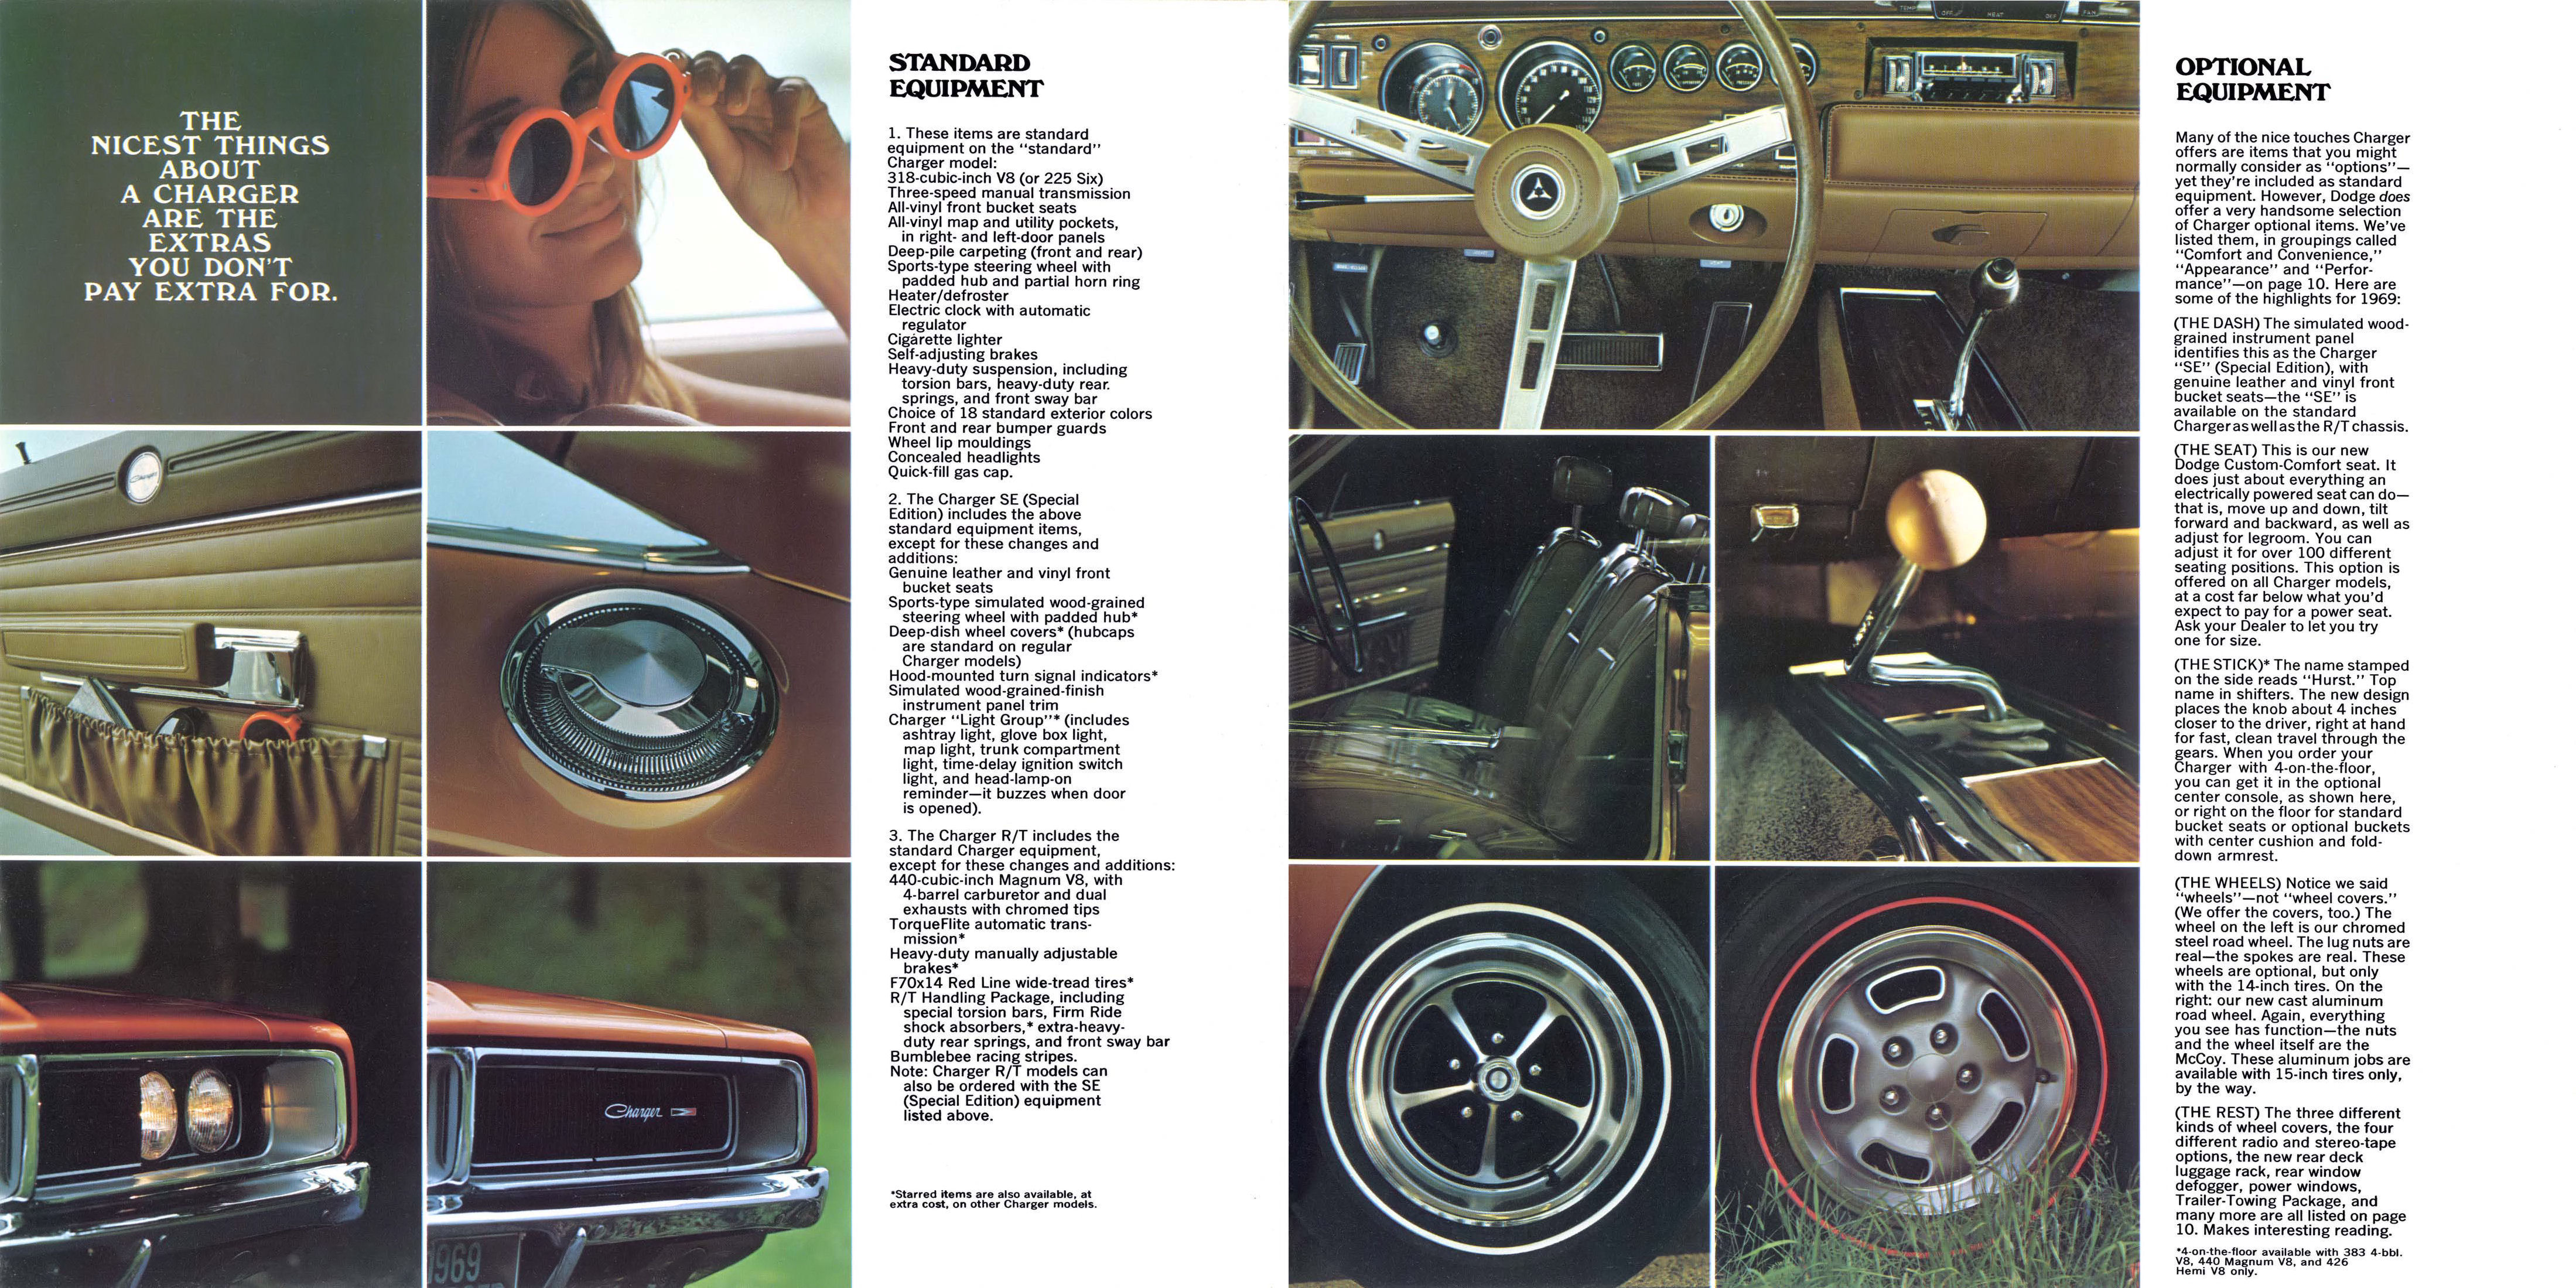 1969 Dodge Charger Brochure